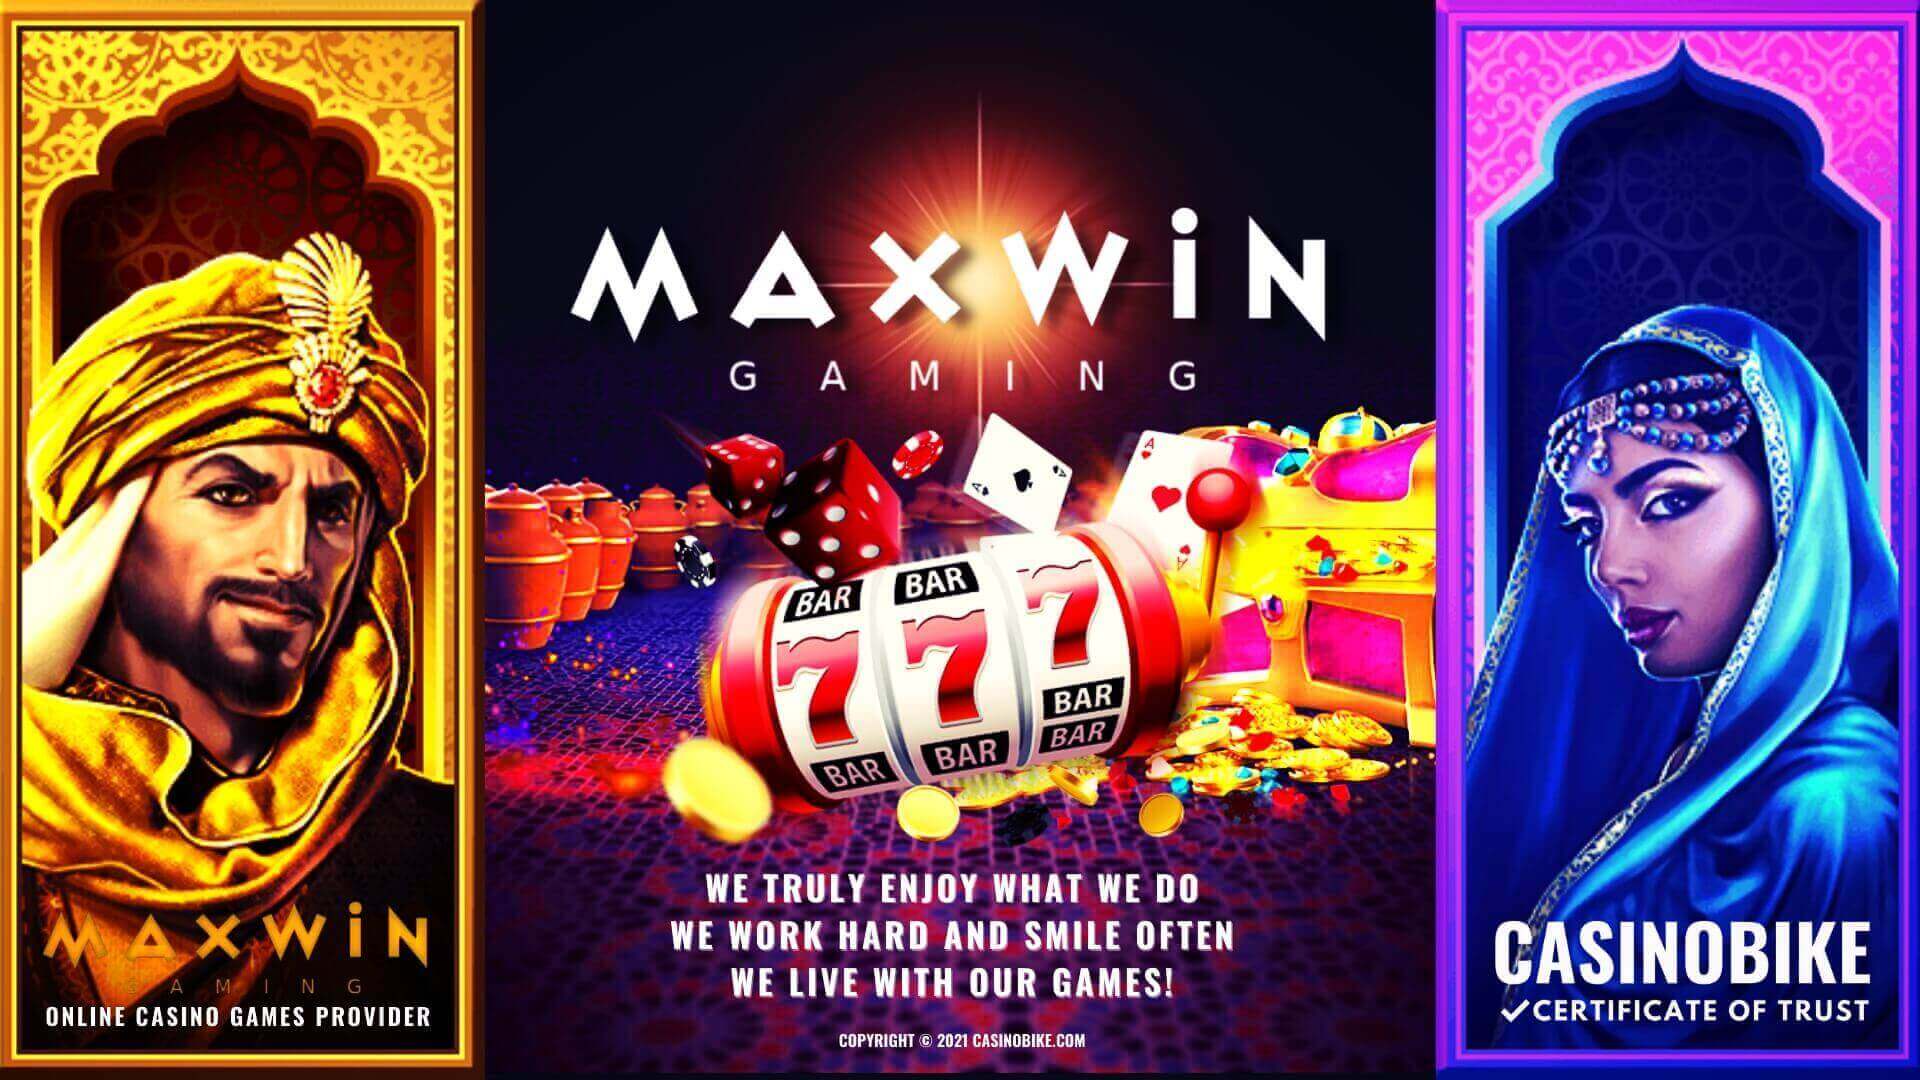 Max Win Gaming Online Casino Games Provider